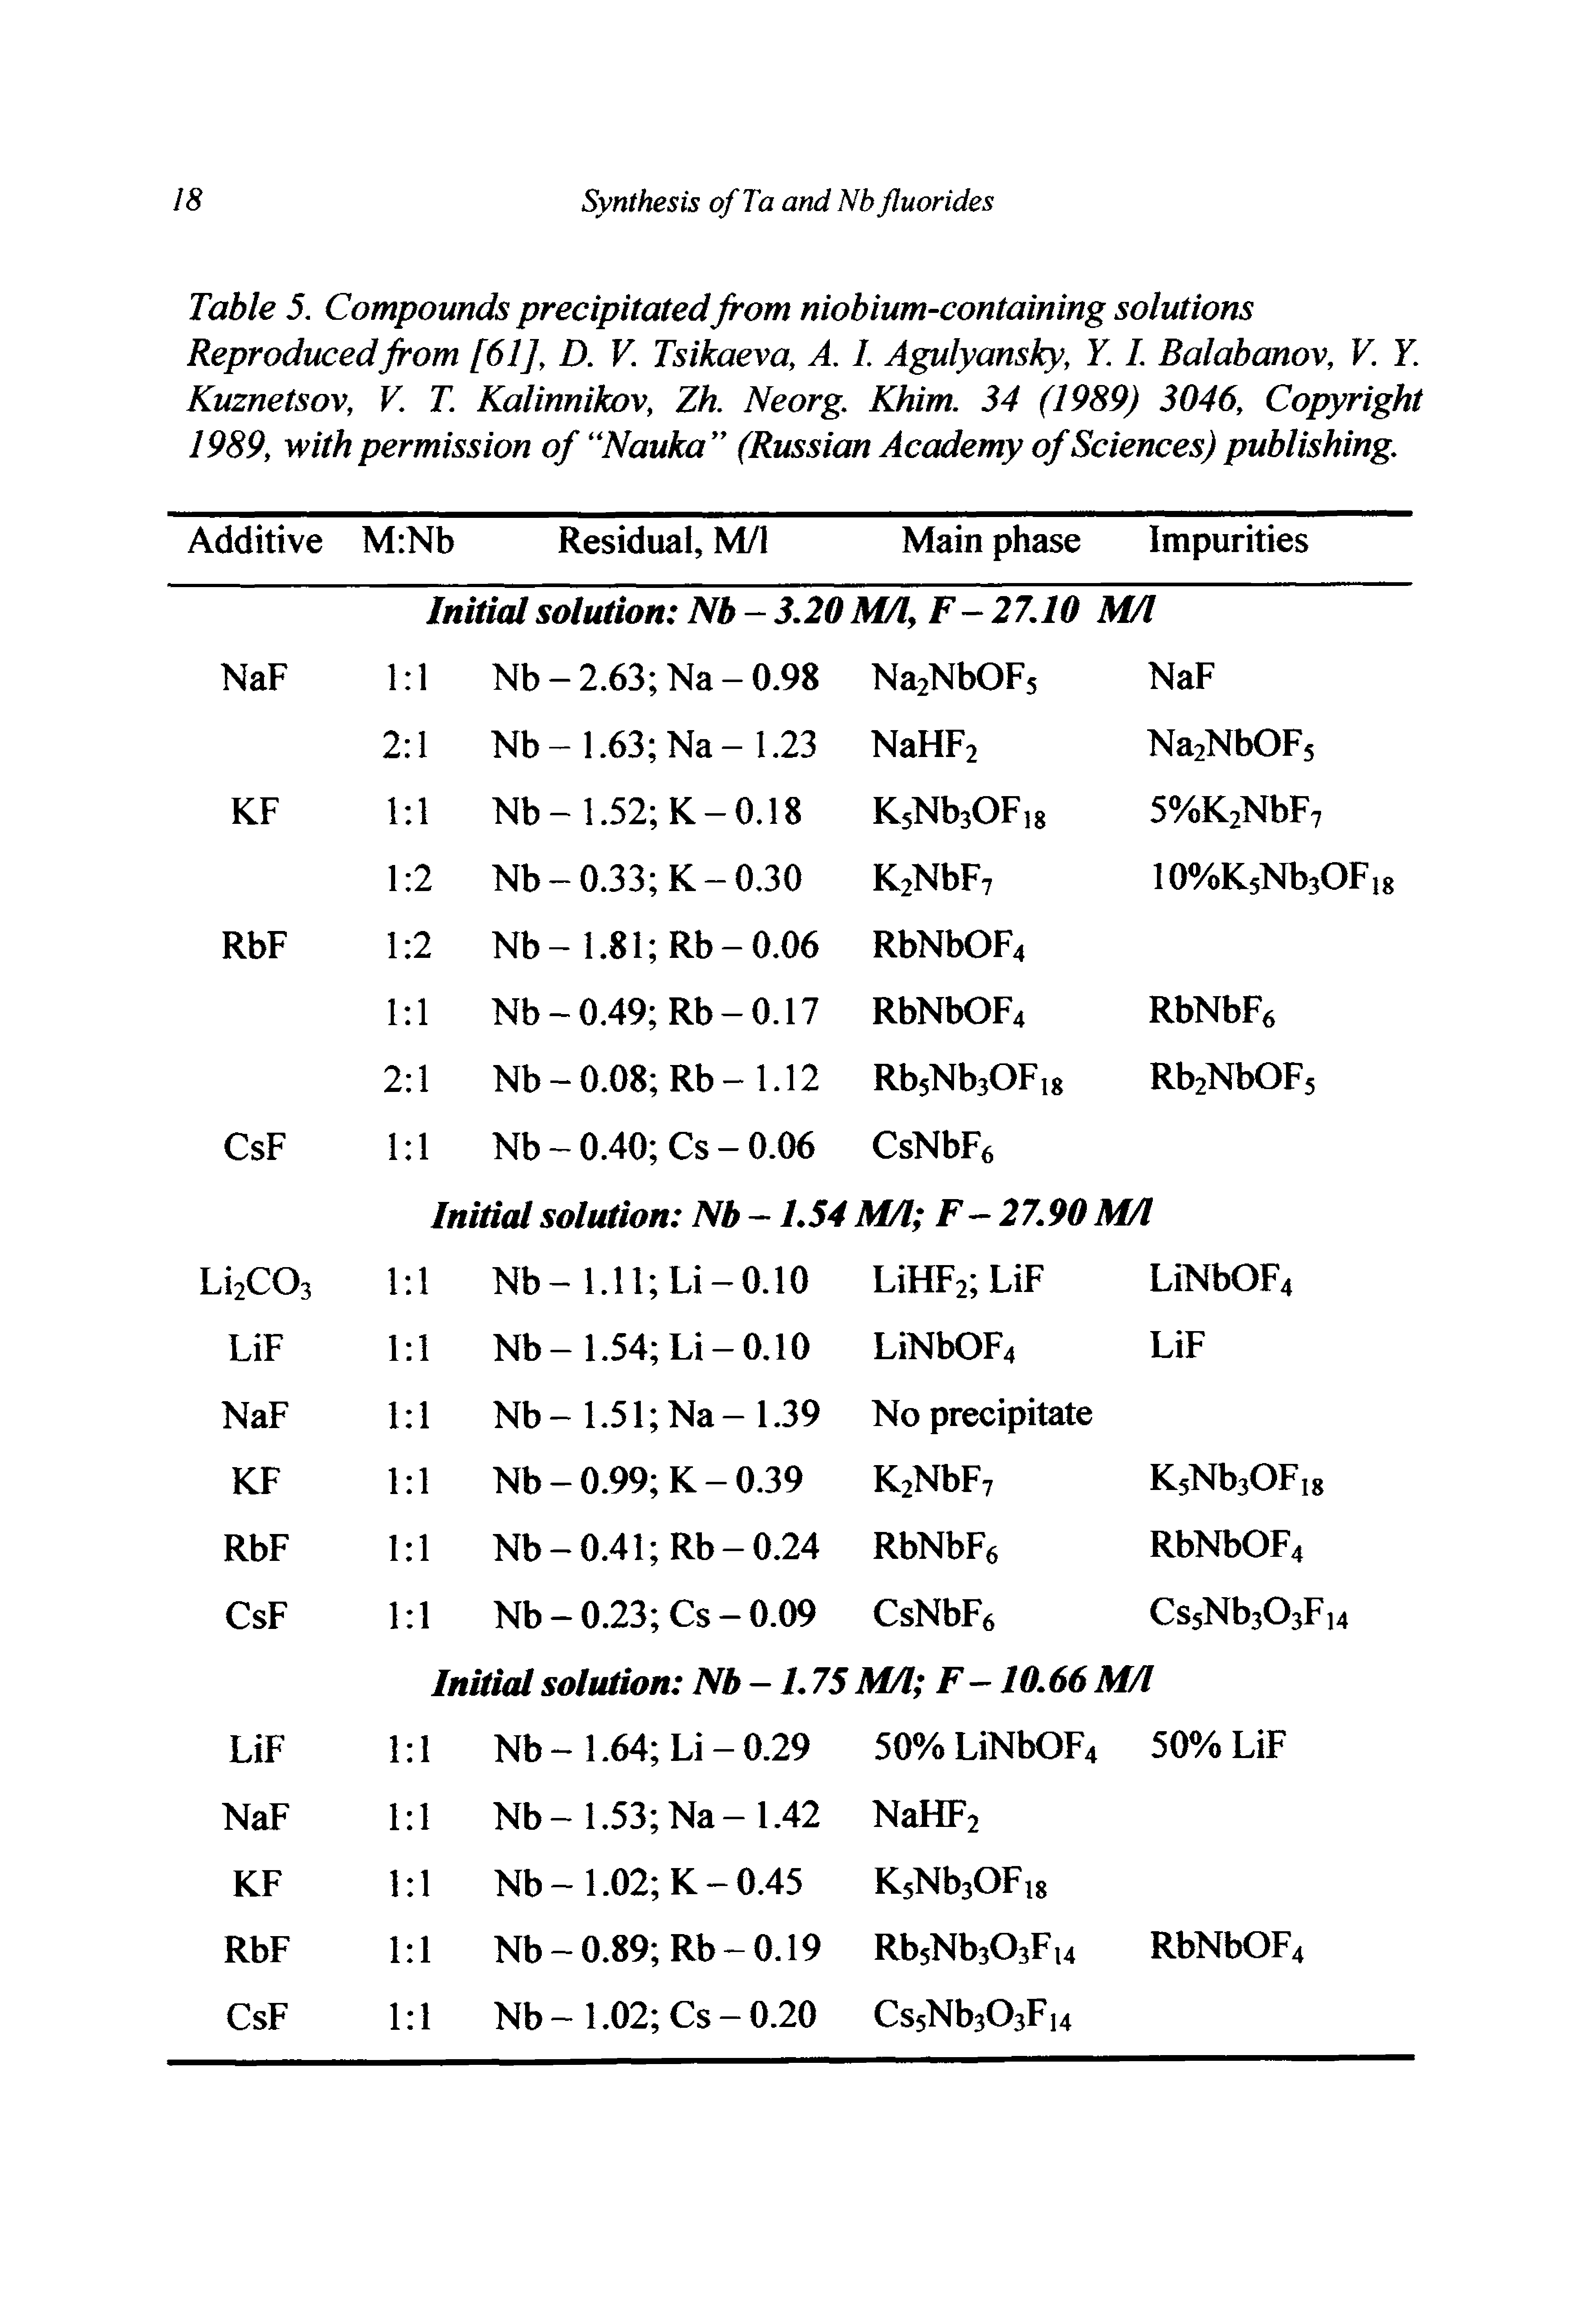 Table 5. Compounds precipitated from niobium-containing solutions Reproducedfrom [61], D. V. Tsikaeva, A. I. Agulyansky, Y. I. Balabanov, V. Y. Kuznetsov, V. T. Kalinnikov, Zh. Neorg. Khim. 34 (1989) 3046, Copyright 1989, with permission of Nauka (Russian Academy of Sciences) publishing.